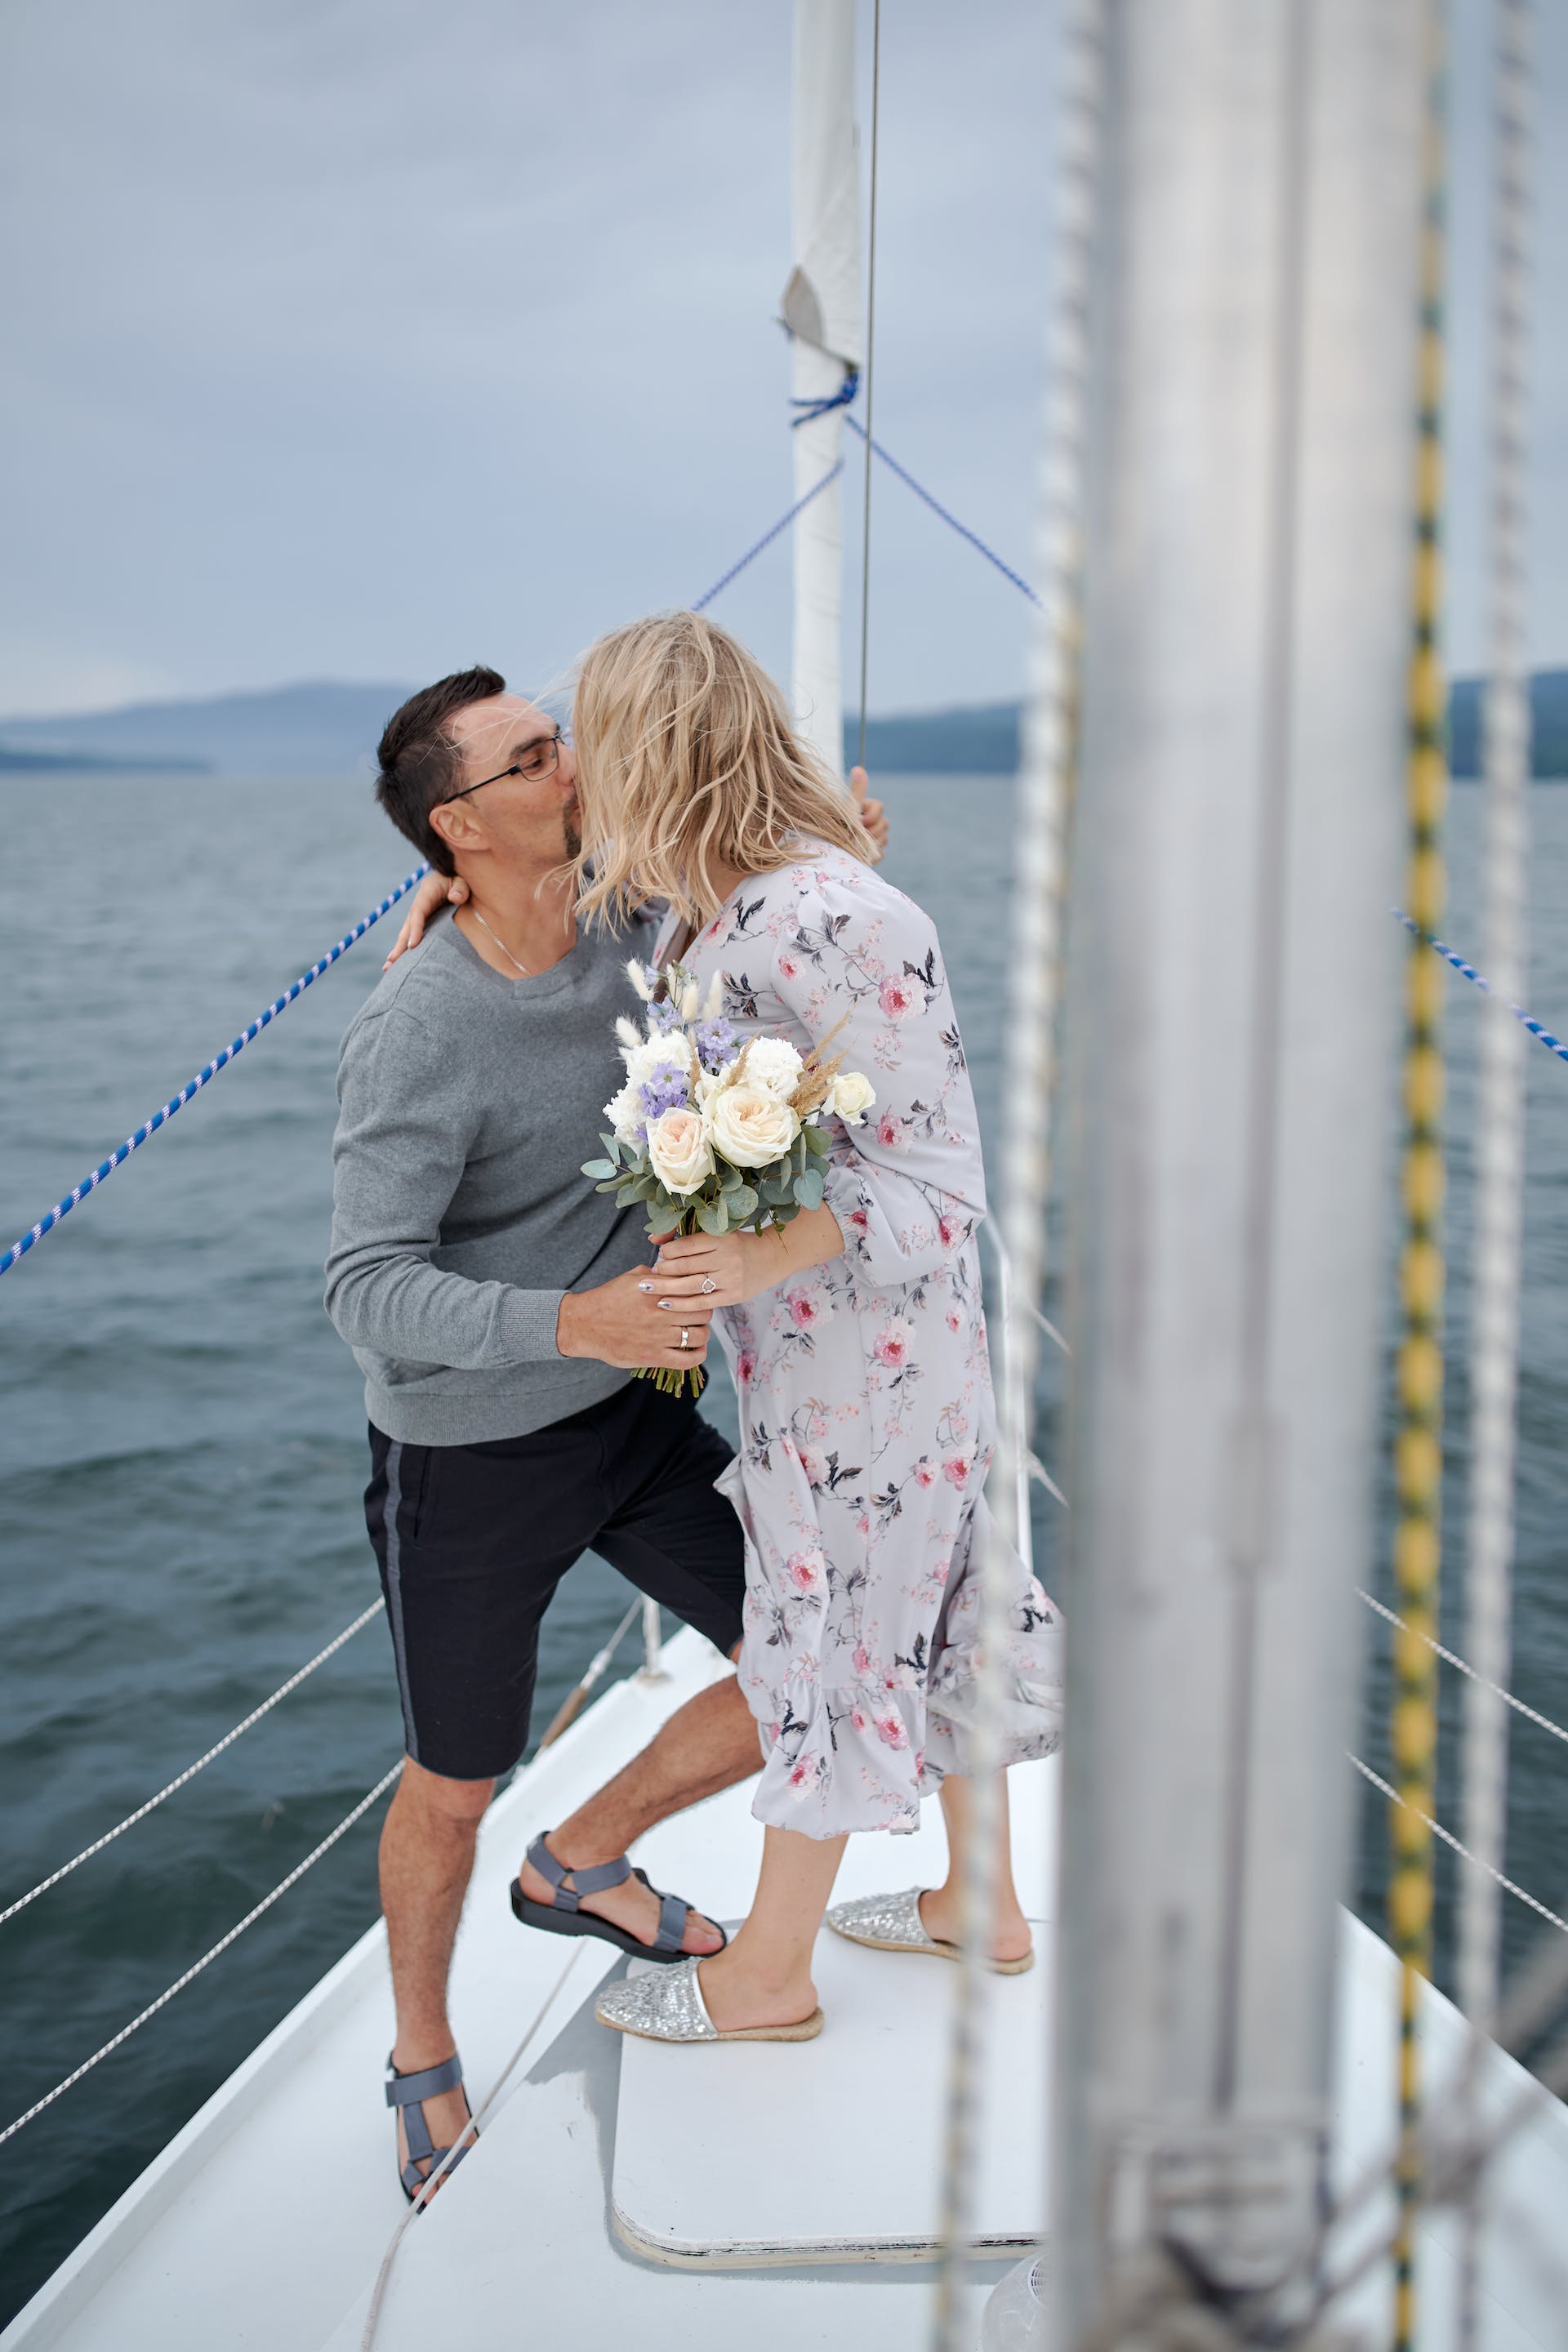 Woman kissing boyfriend on a yacht | Source: Pexels